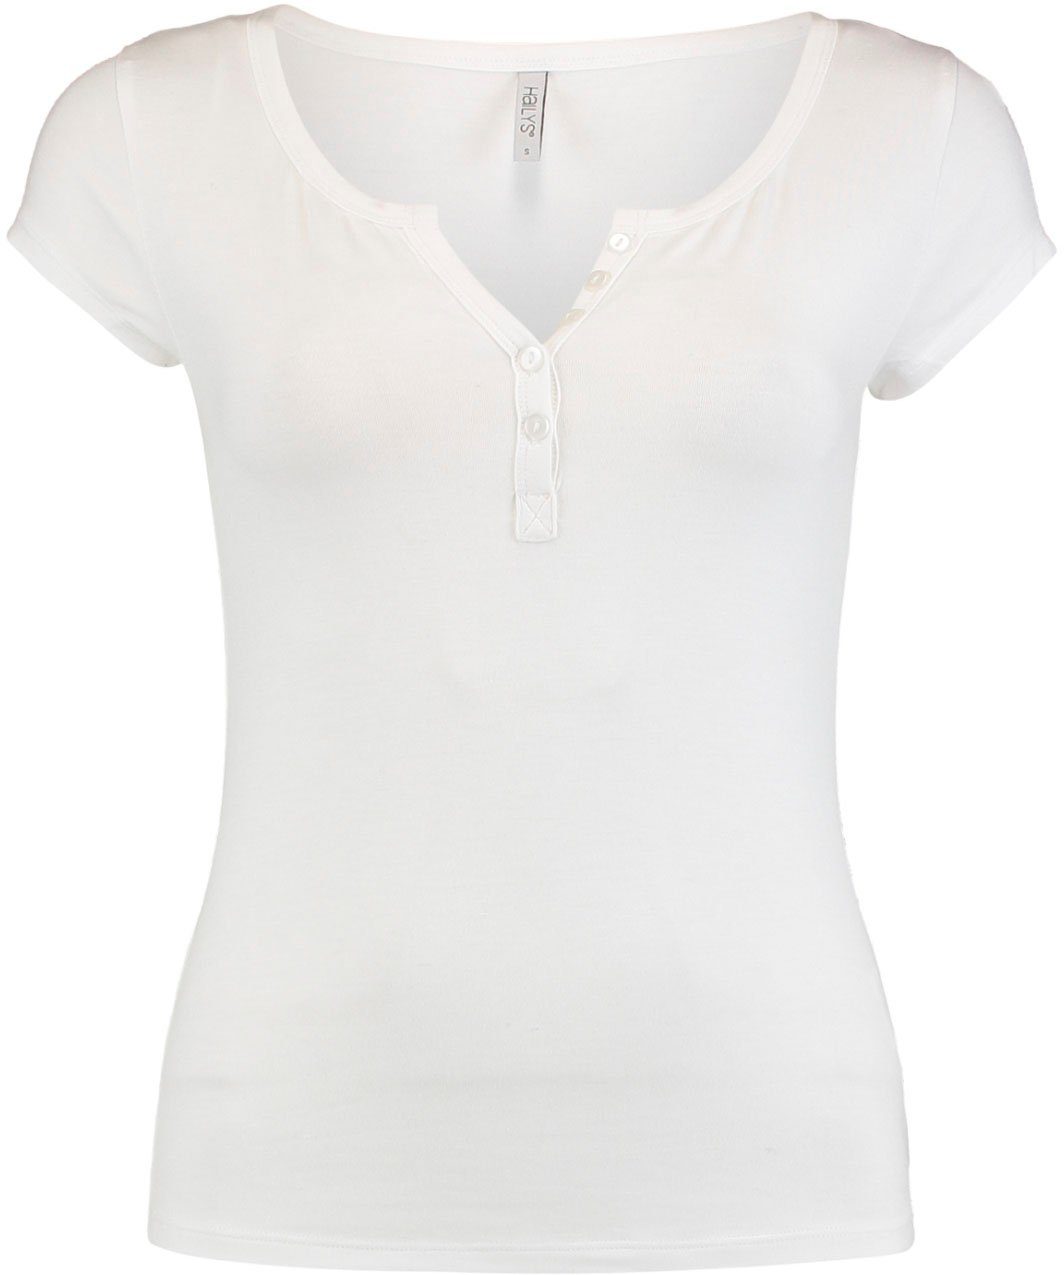 T-Shirt white TP Henna HaILY’S